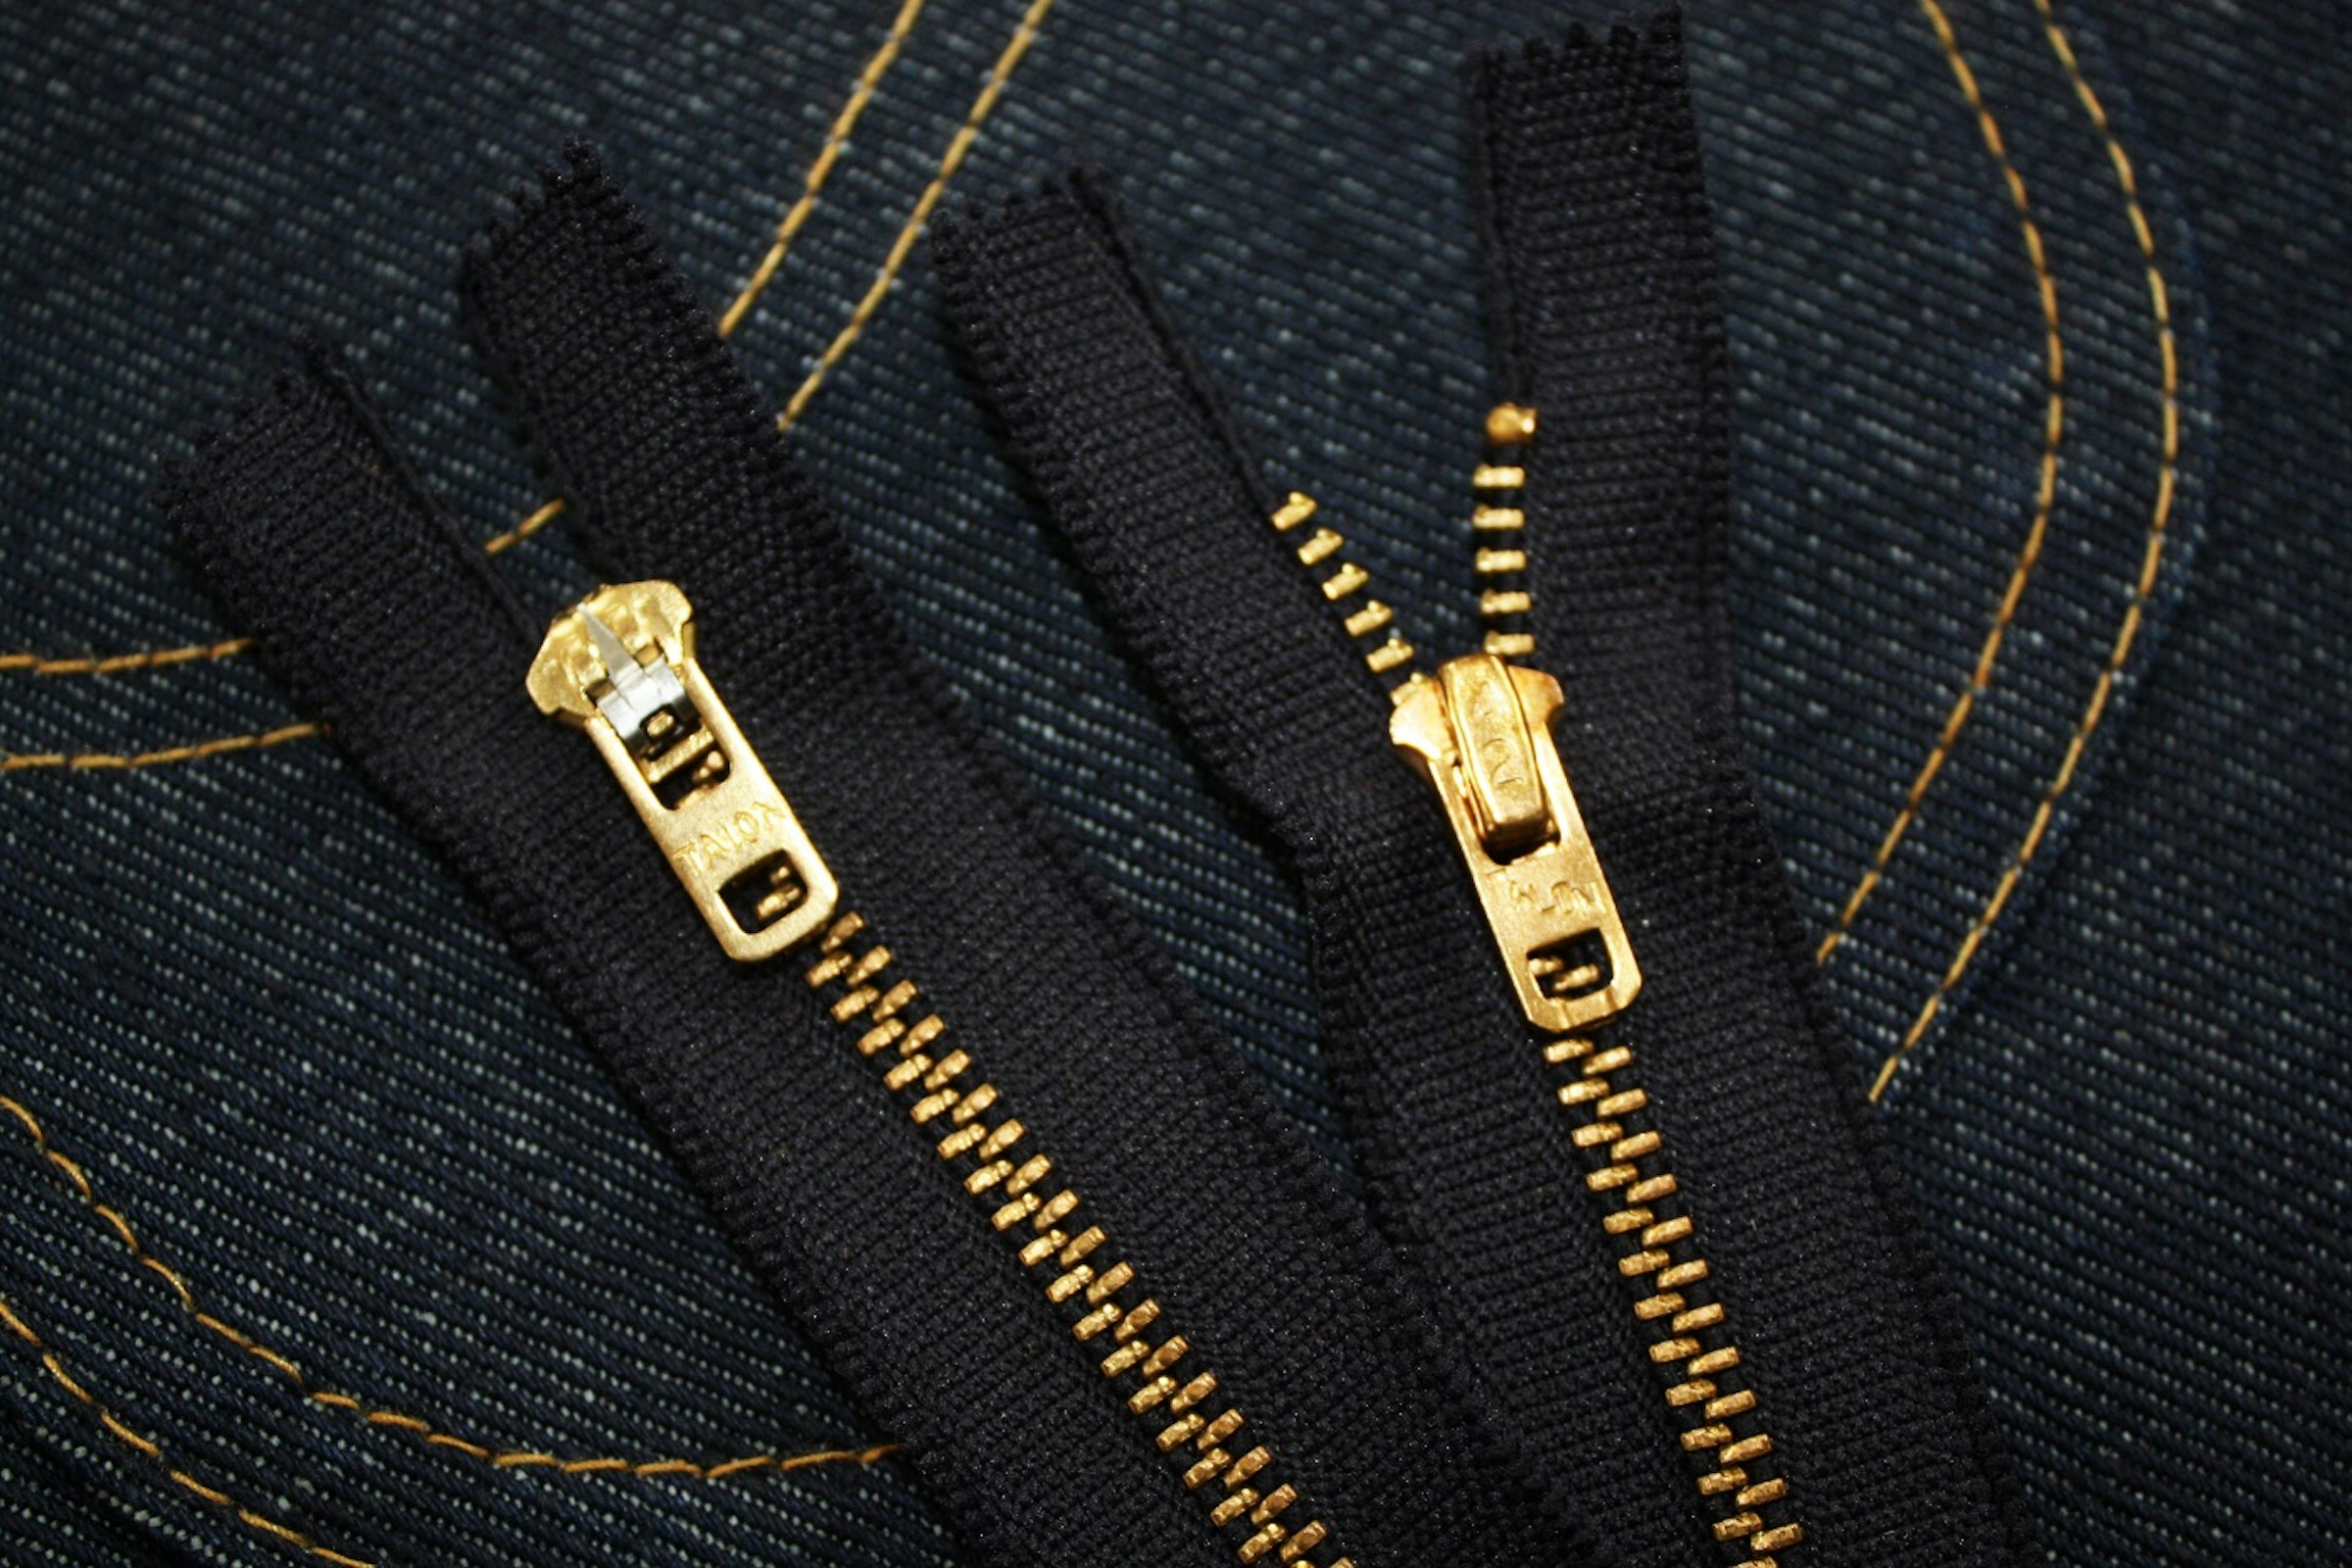 Representative pants zippers of the 1960s 'No.4 zipper' Left: TALON Claw Type Lock Zipper Right: TALON42 Zipper